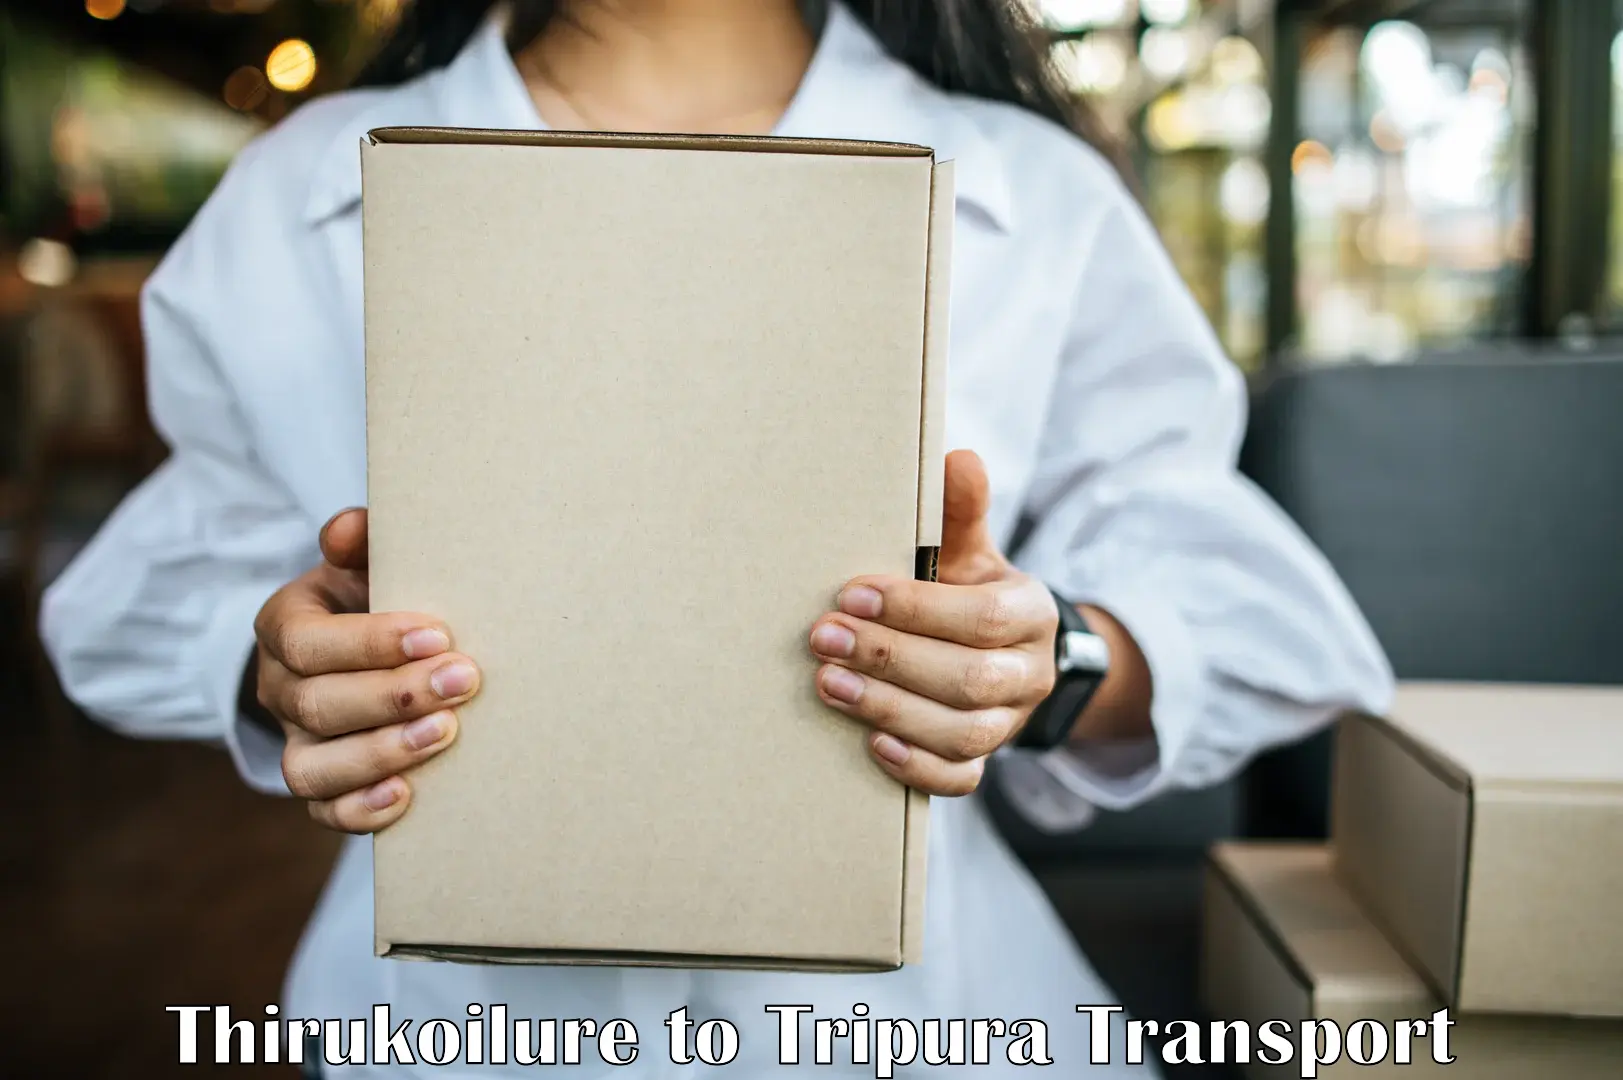 Online transport booking Thirukoilure to Udaipur Tripura